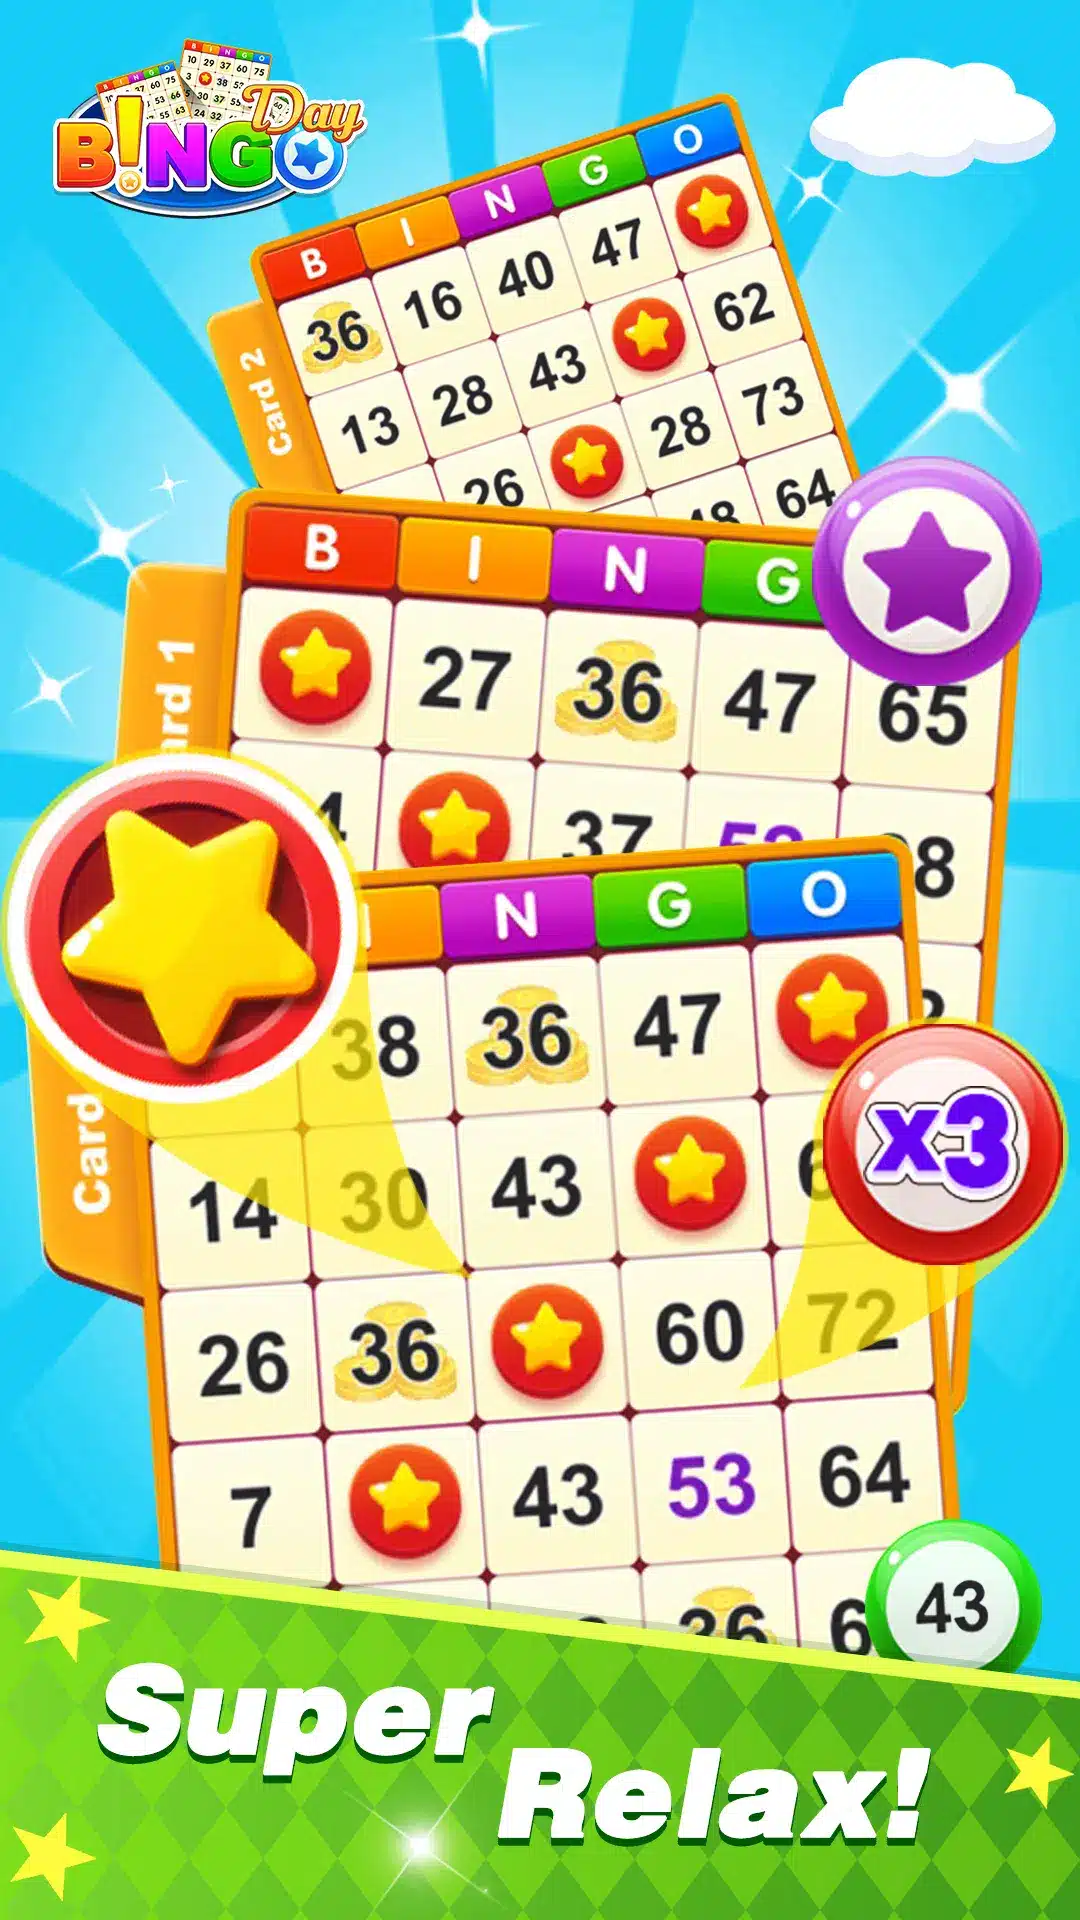 Bingo Day Image 4